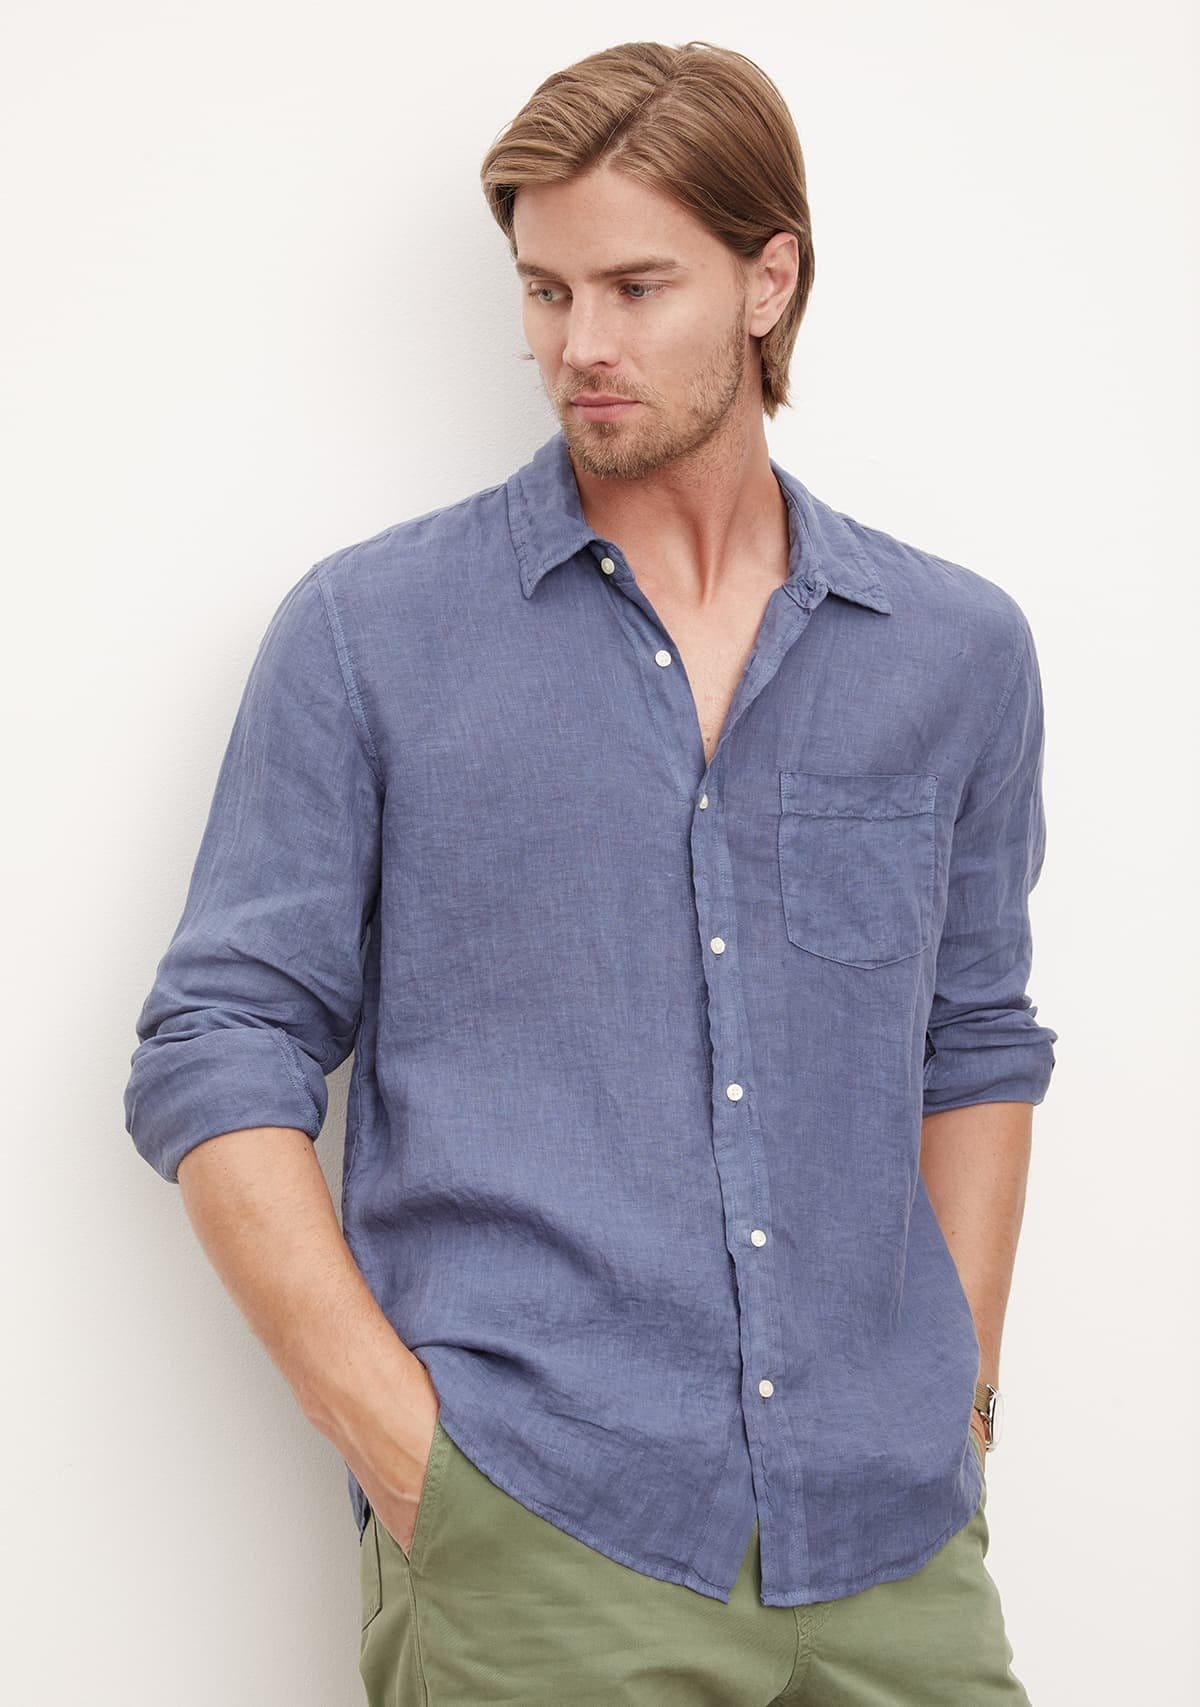 Model wearing the Benton Linen Shirt